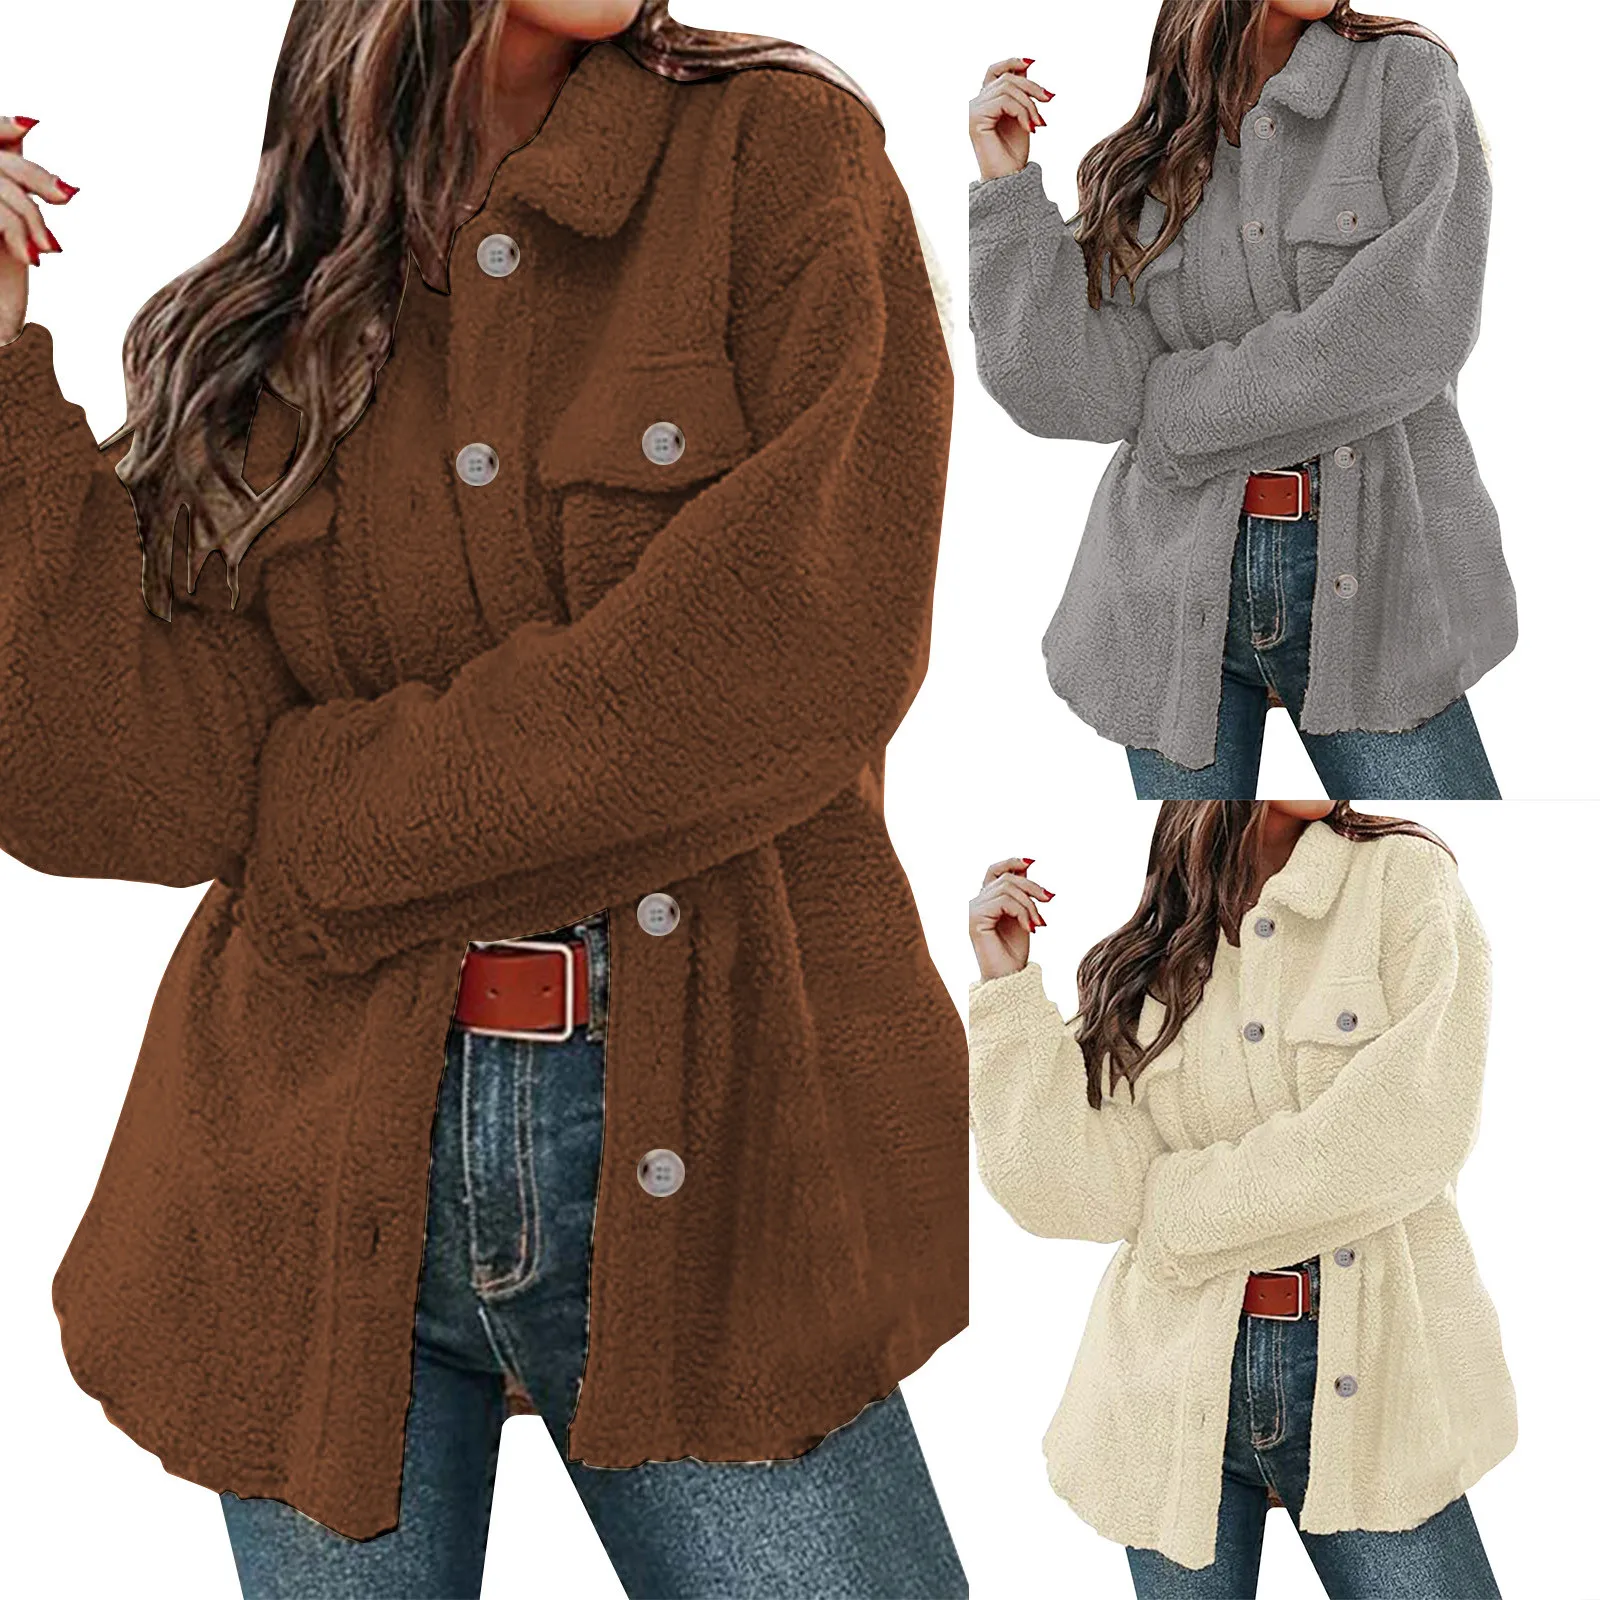 

Women's Winter Fleece Coat Solid Color Lamb Plush Warm Cardigan Coat Jacket Button Pocket Casual Keep Warm Outwear Overcoats Top